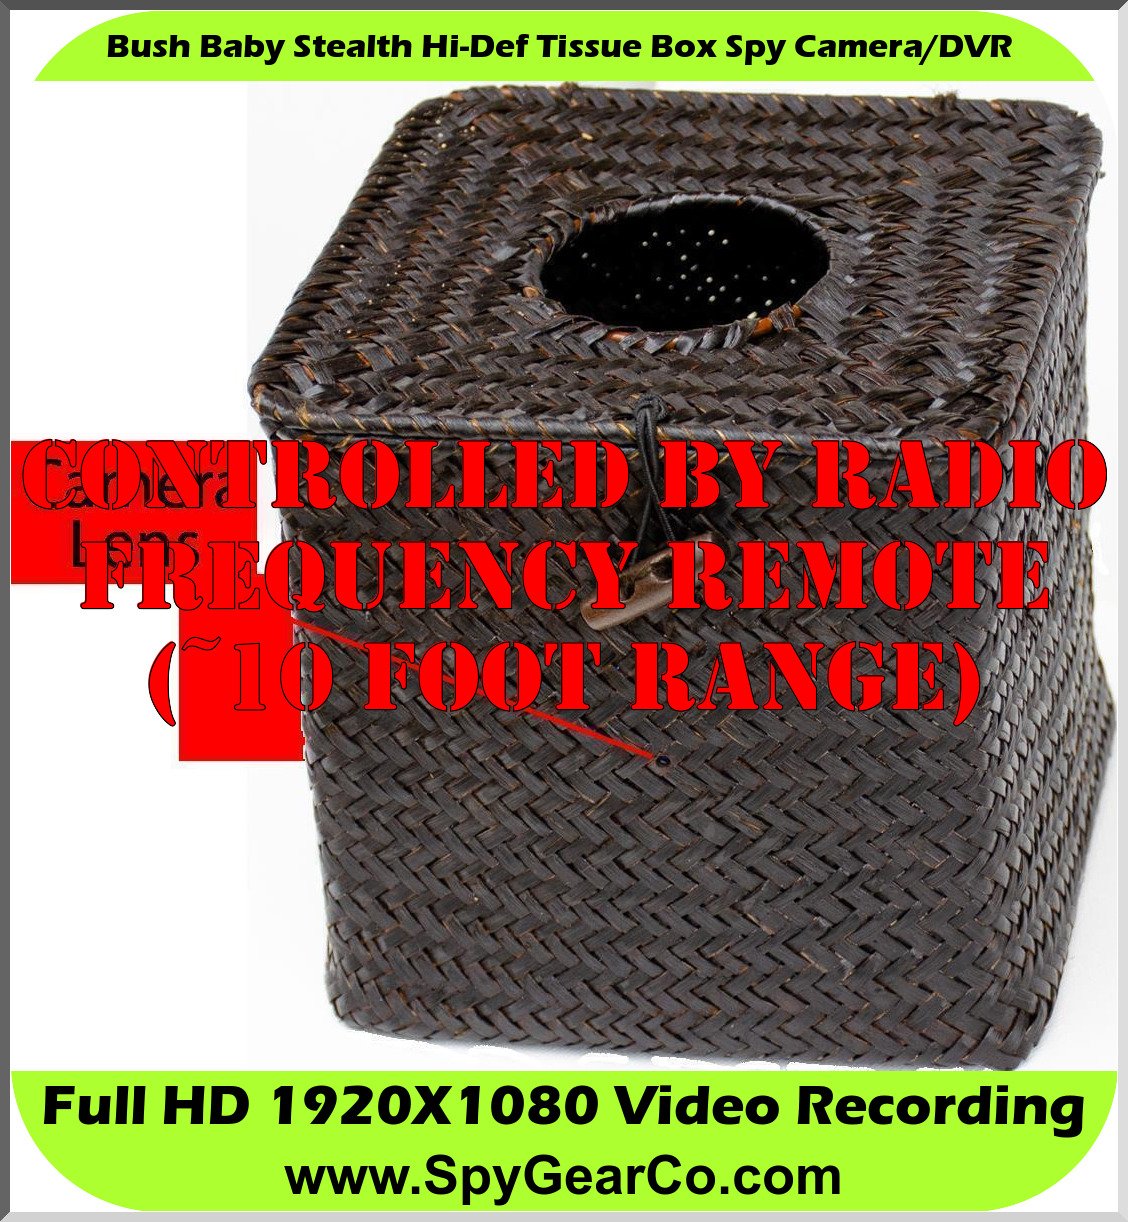 Bush Baby Stealth Hi-Def Tissue Box Spy Camera/DVR